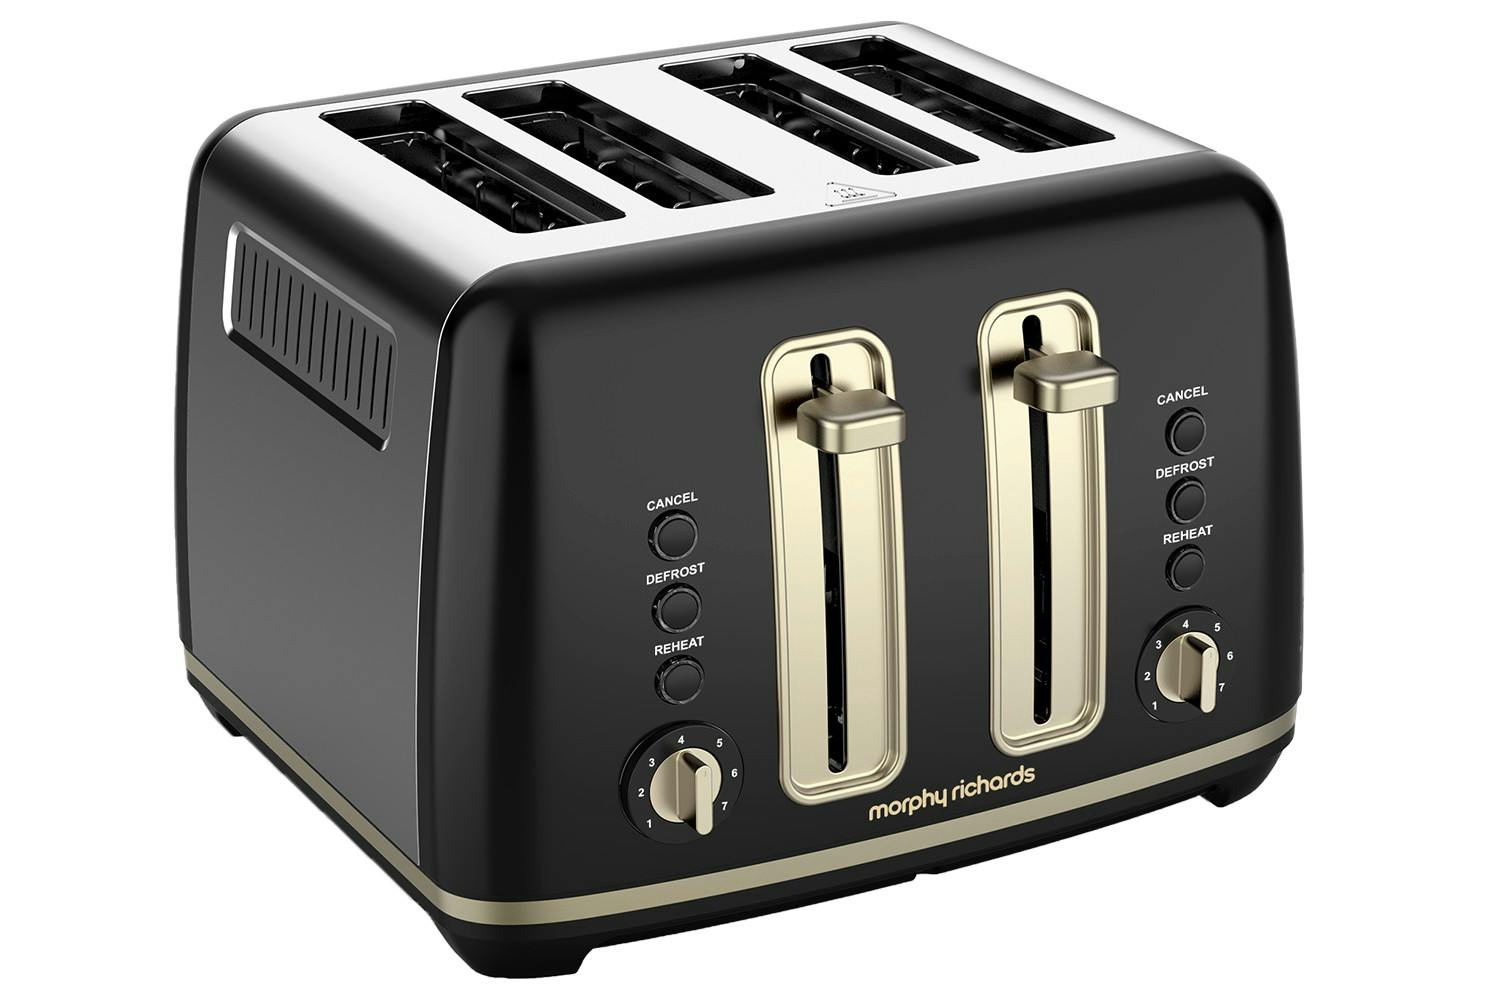 Buy MORPHY RICHARDS Signature Opulent 245742 4-Slice Toaster